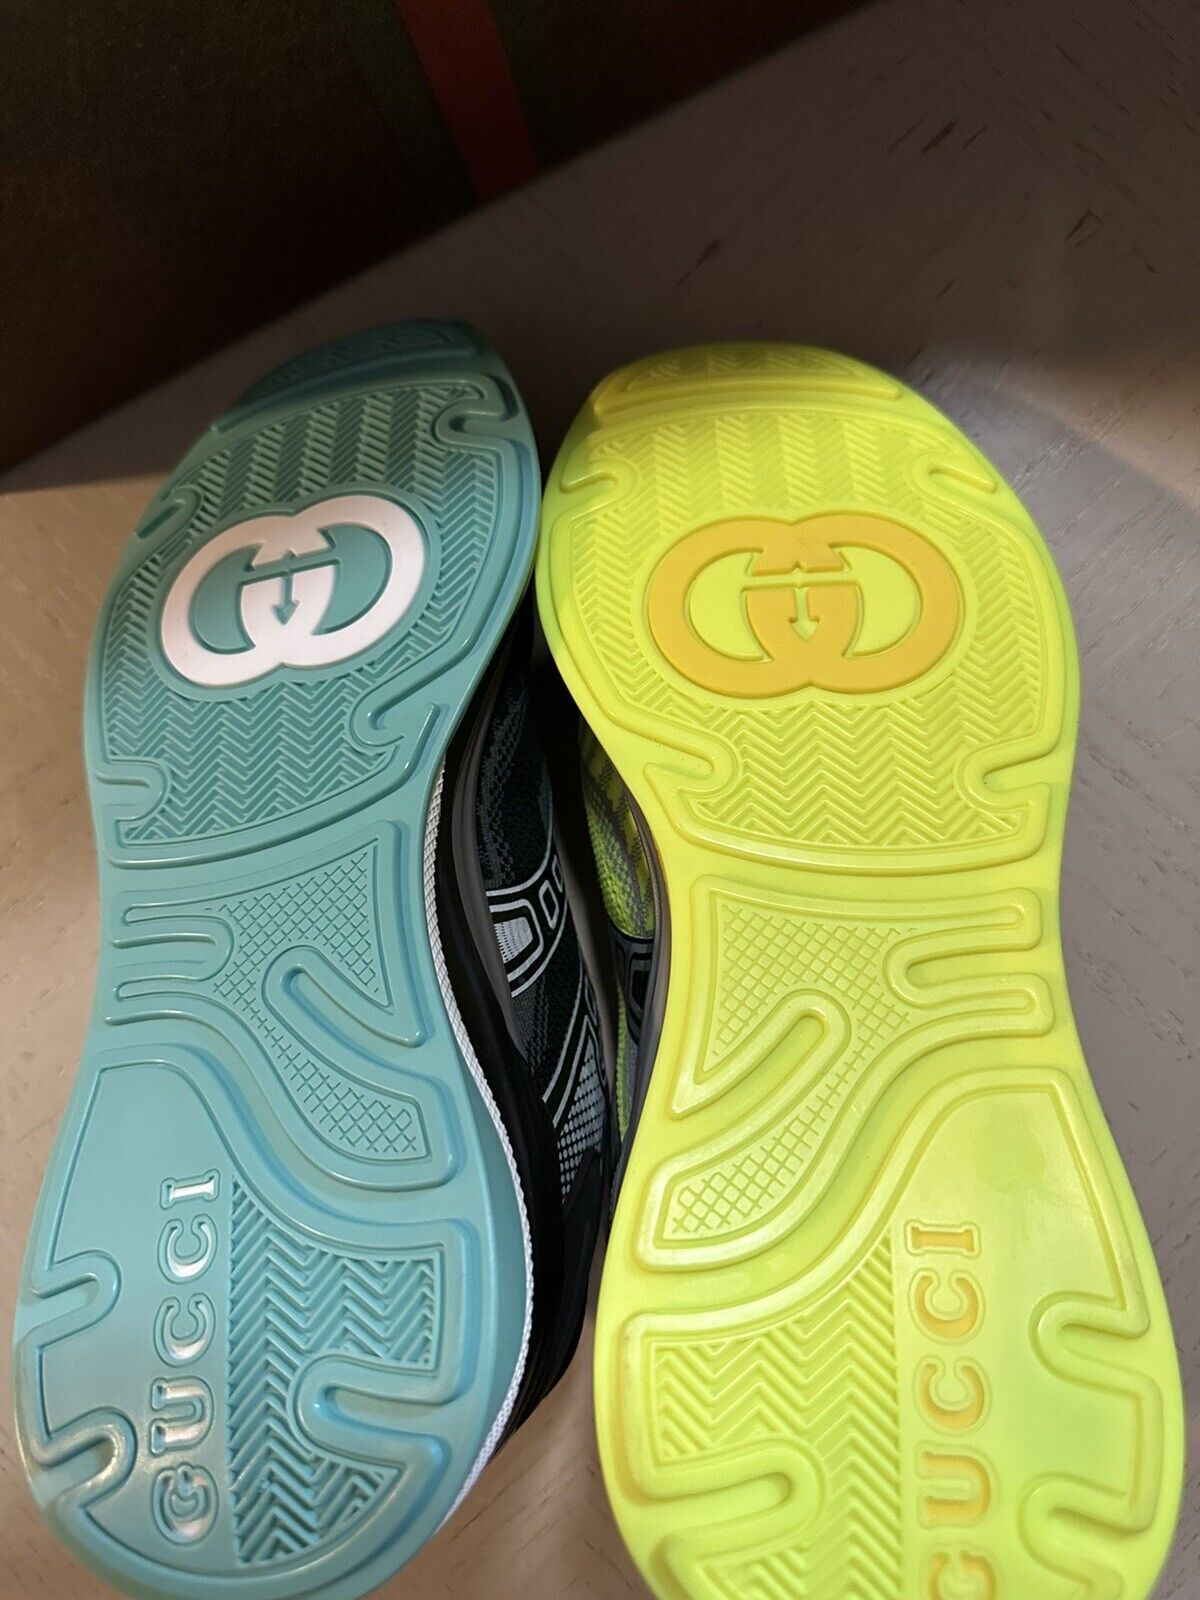 New Gucci Women’s Ultrapace Two-Tone Sneakers Shoes Black/Yellow 6.5 US/36.5 Eu